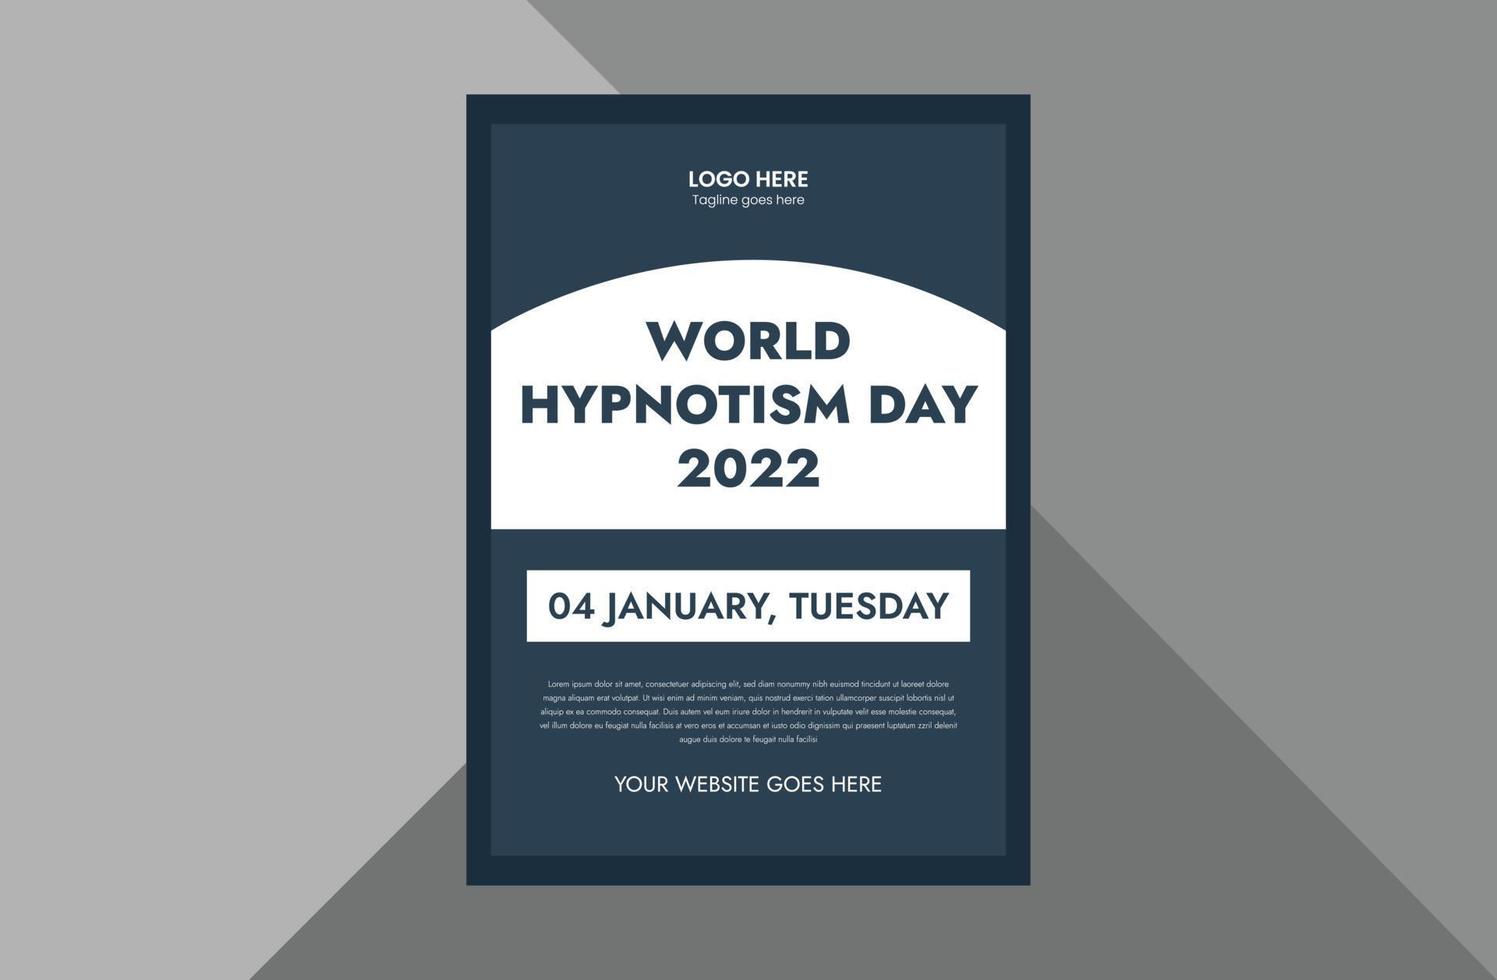 world hypnotism day flyer template. January 4 world hypnotism day awareness flyer design, poster, cover, print-ready vector